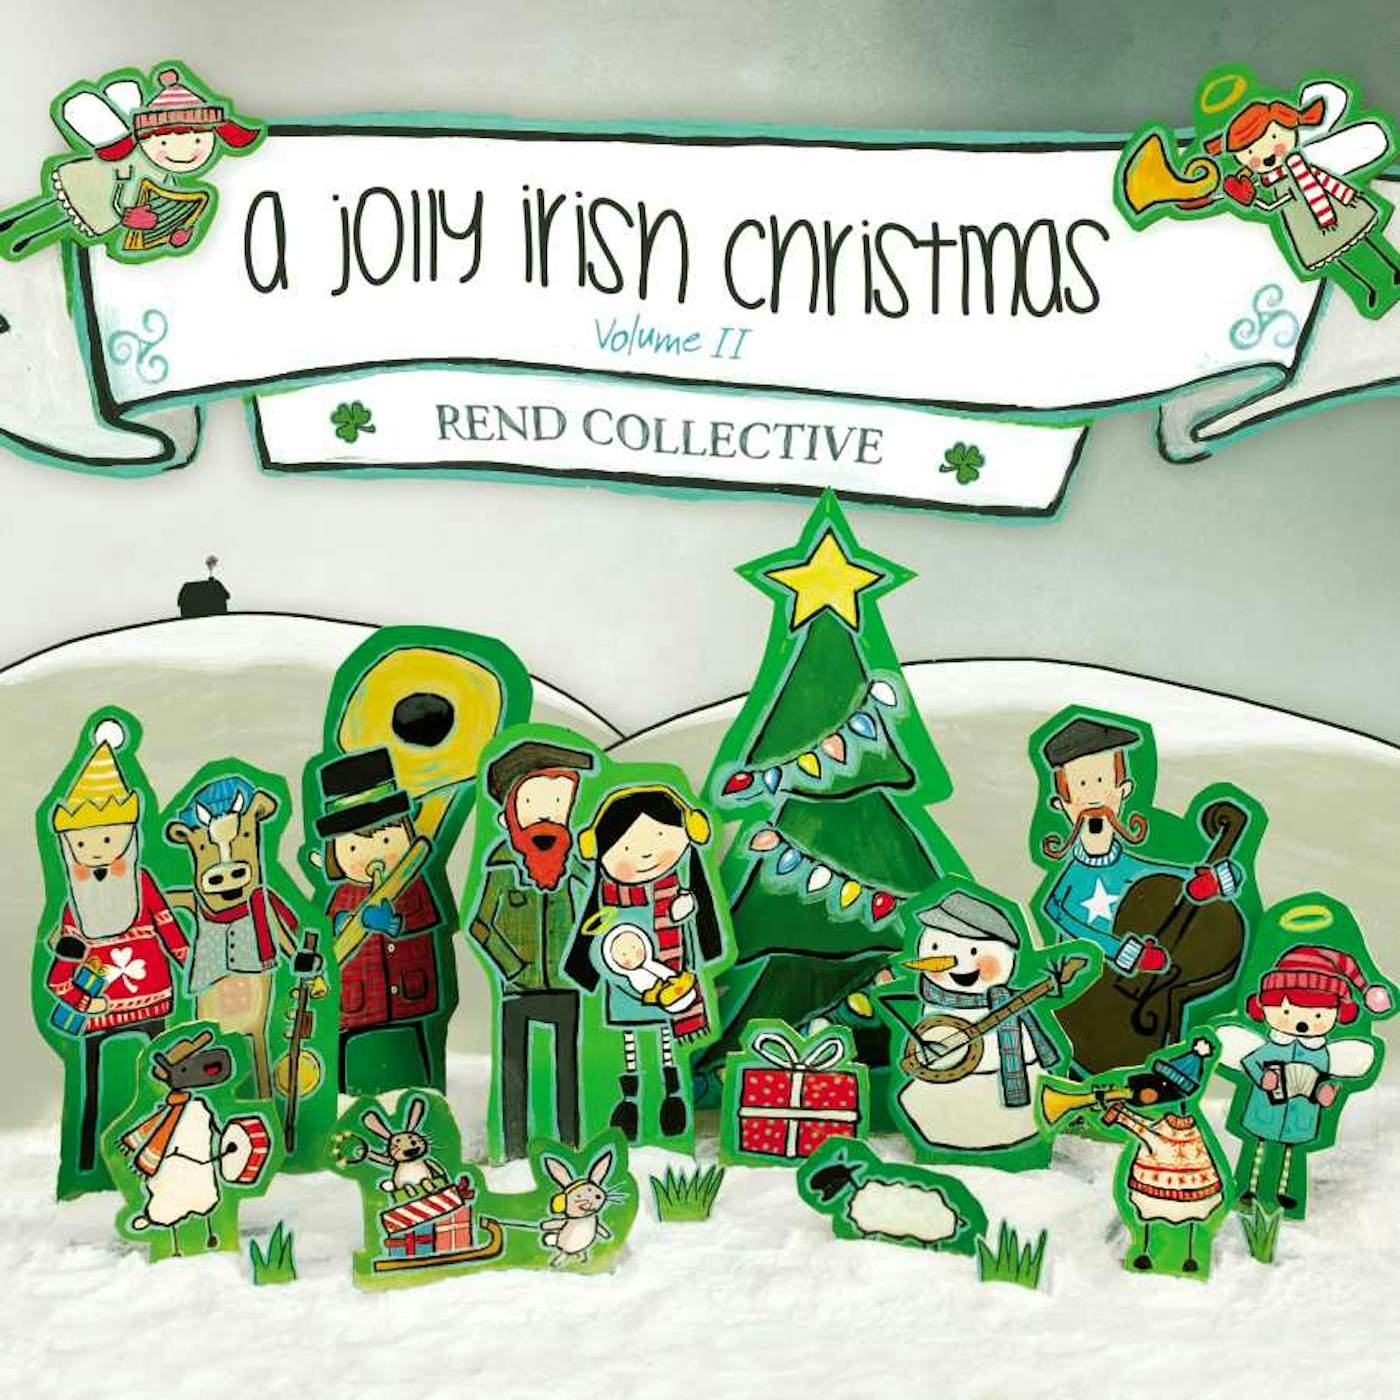 Rend Collective JOLLY IRISH CHRISTMAS VOLUME II CD